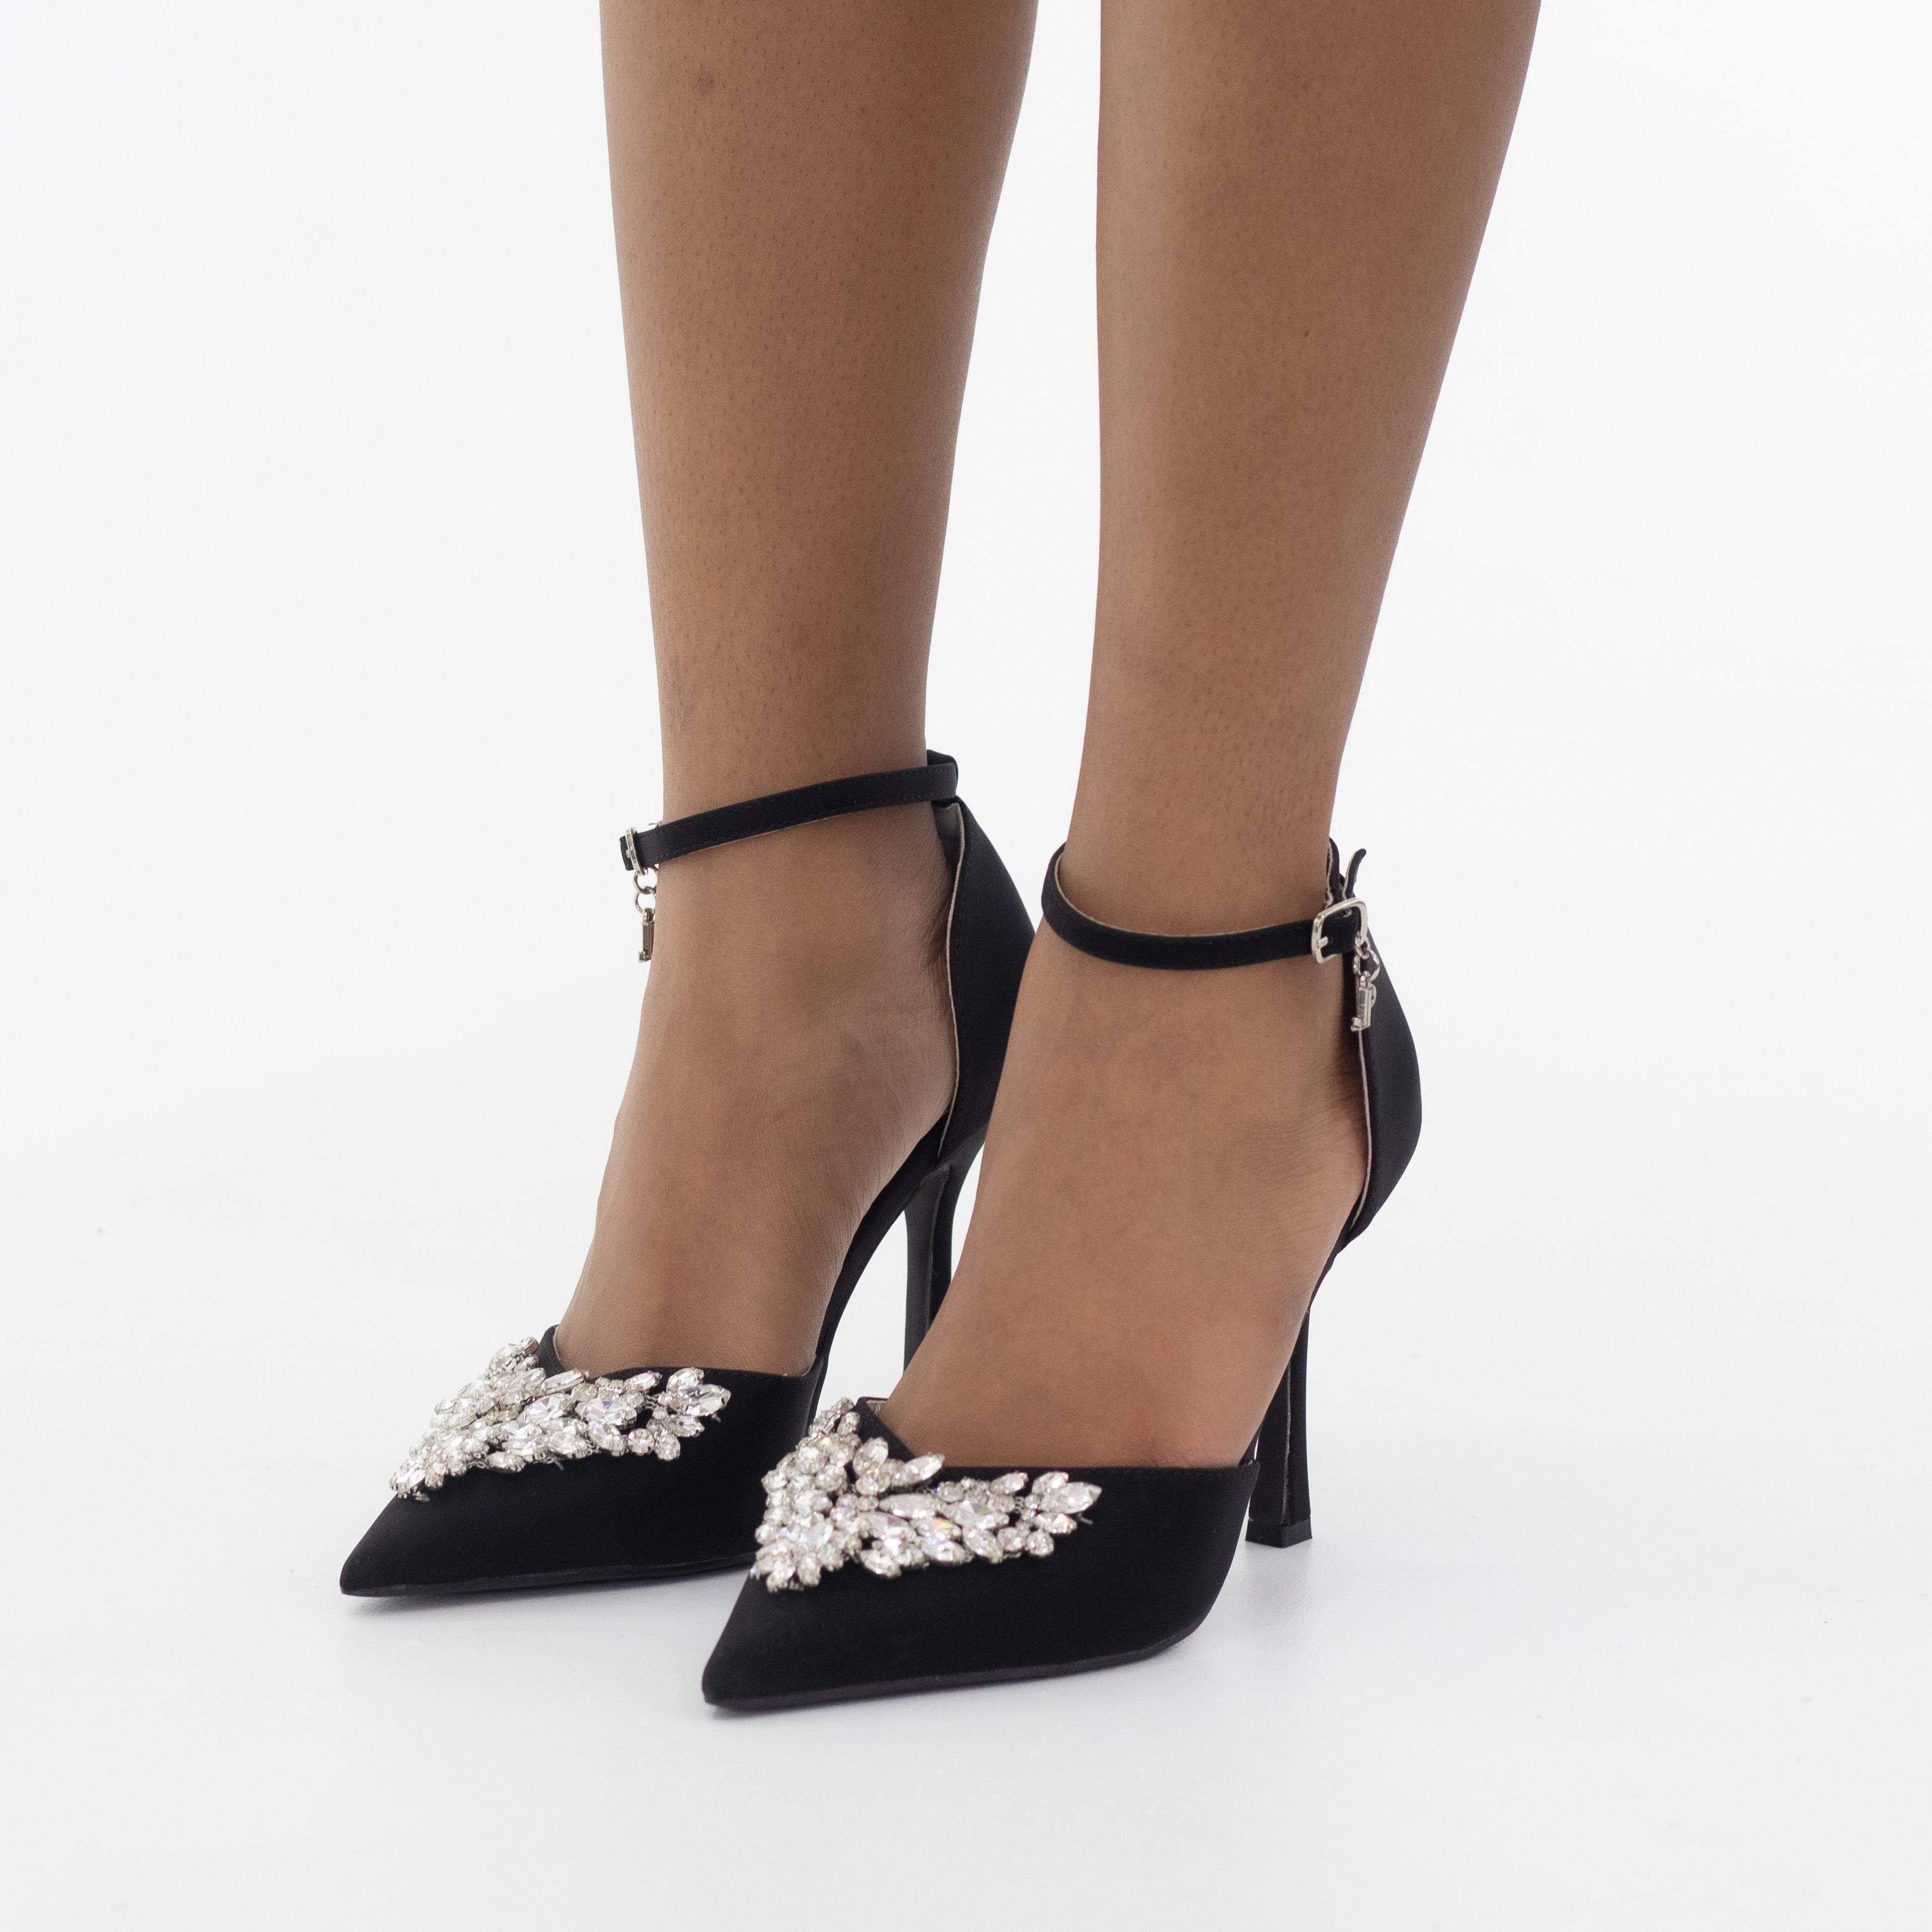 Kora mid heel SATIN PU with v-shaped diamante trim black